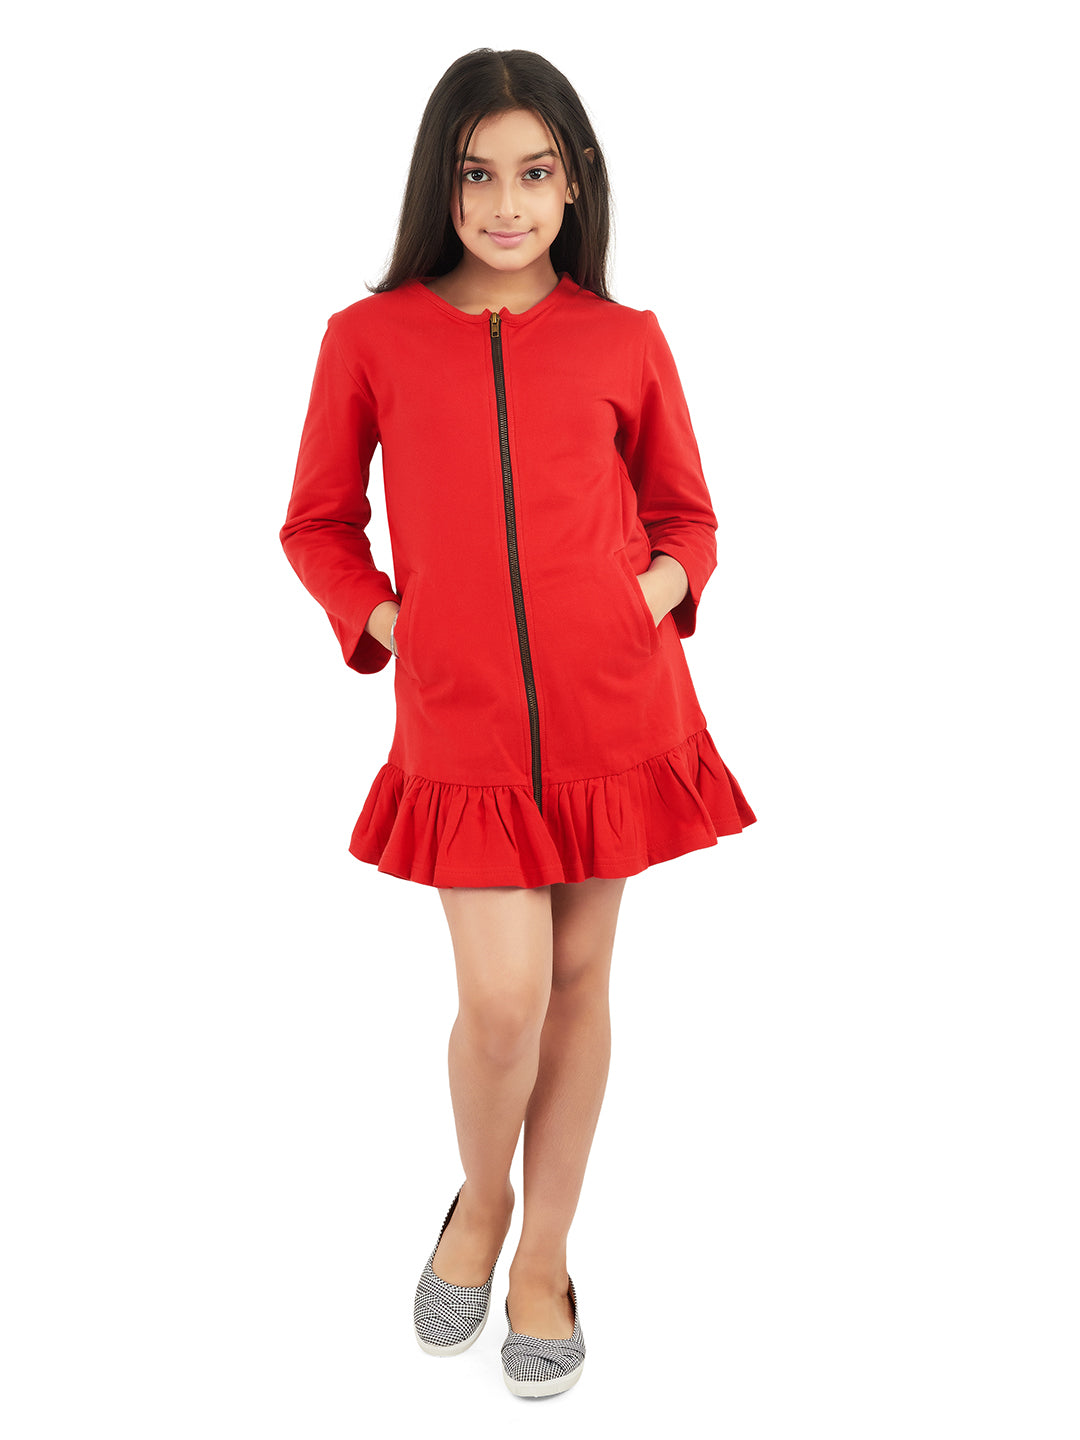 Olele® Girls Fleece Jacket with Front Zipper - Red